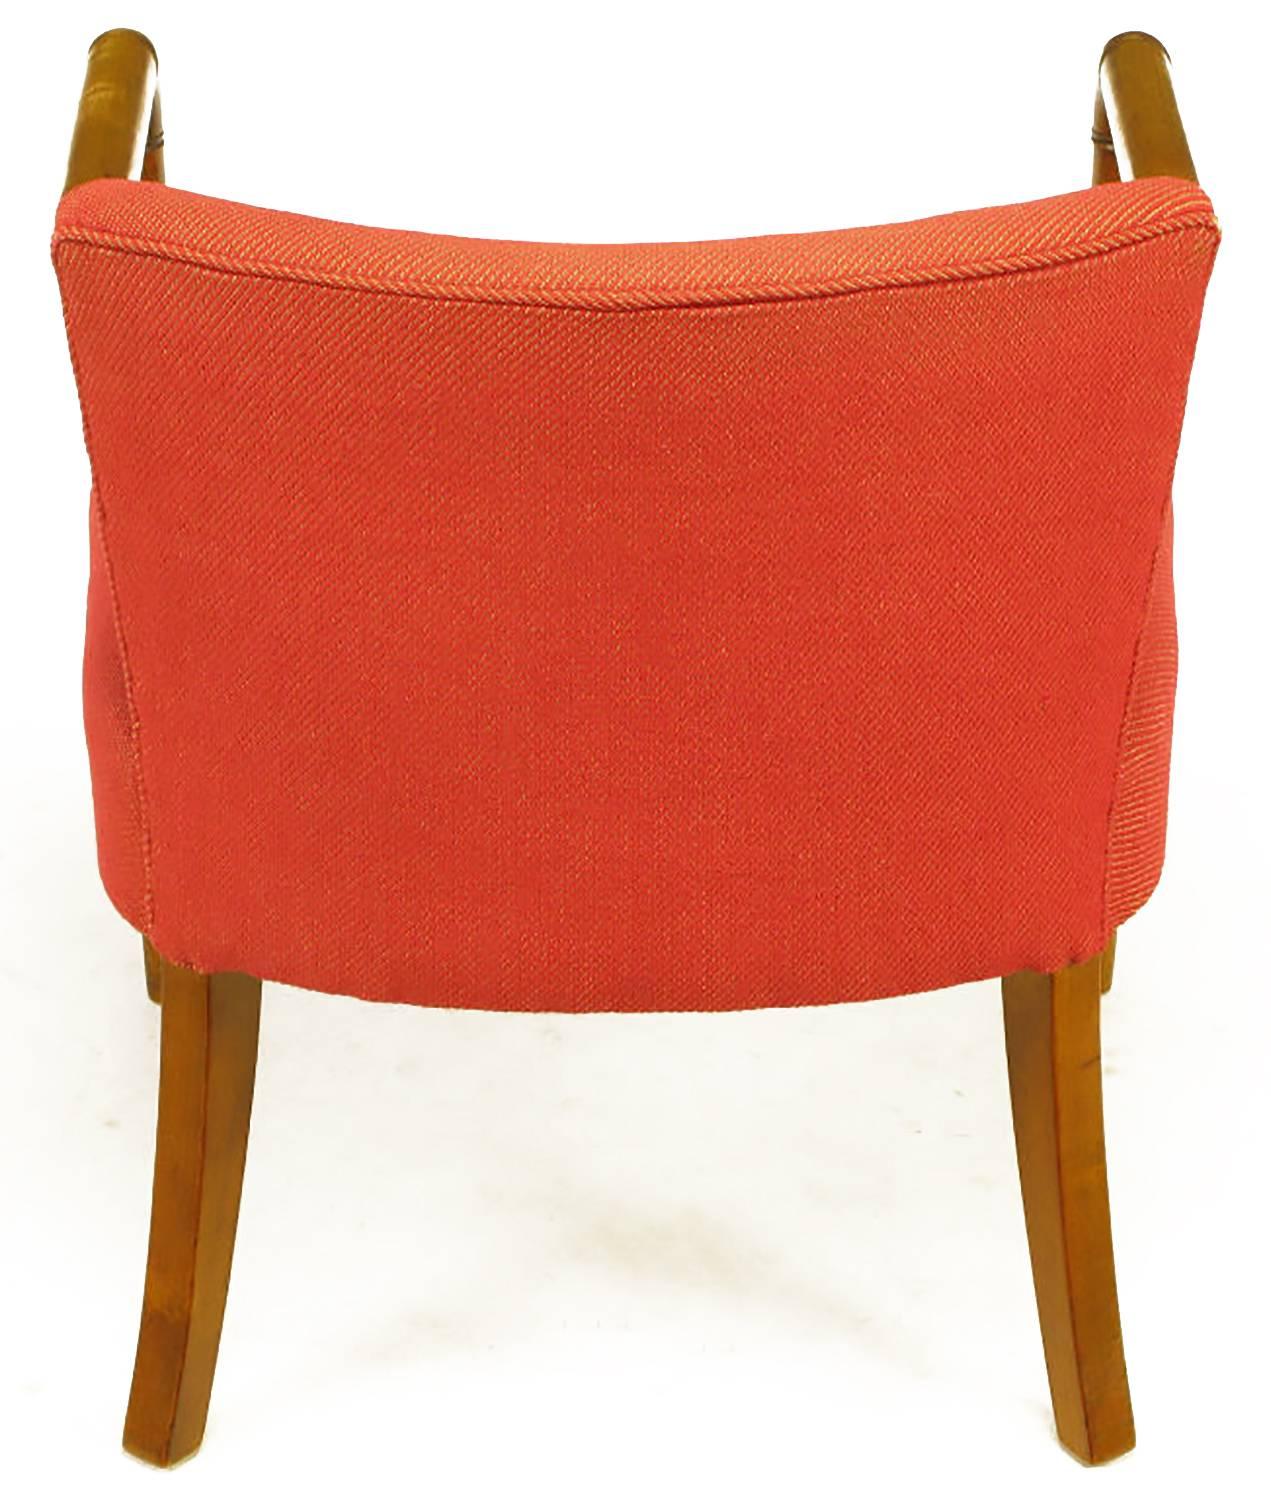 Mid-20th Century Mahogany & Crimson Upholstered Slope-Arm Desk Chair